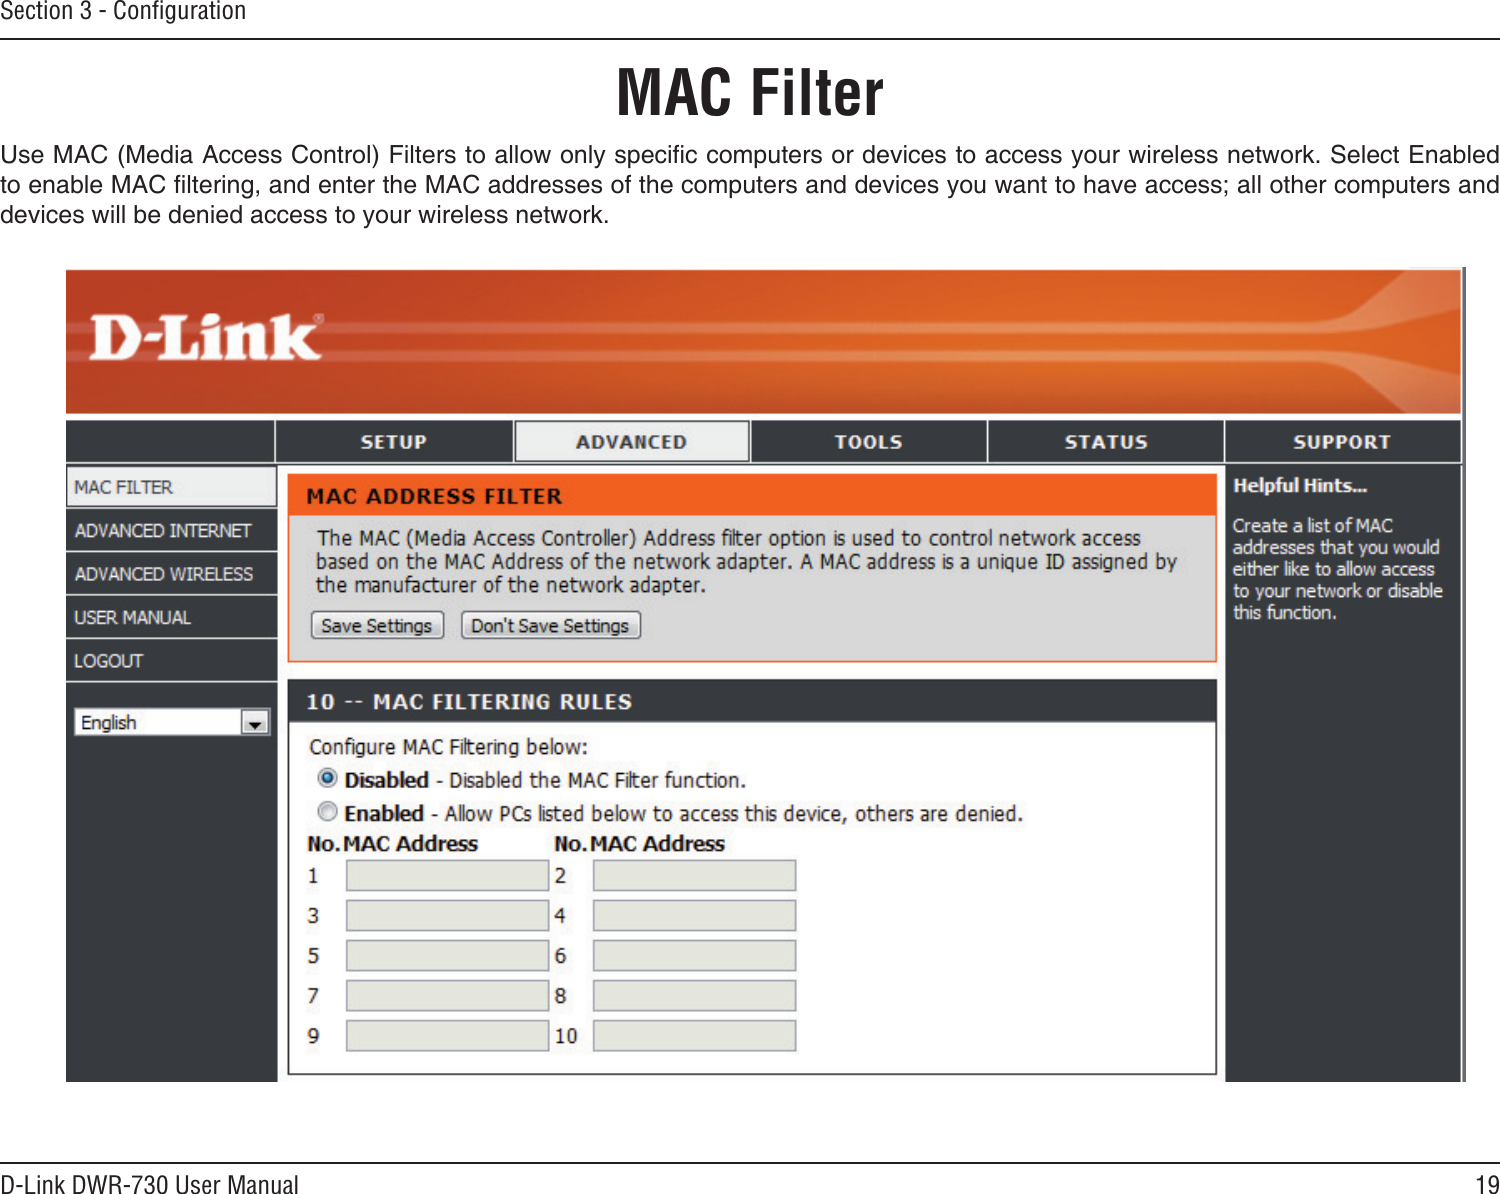 19D-Link DWR-730 User ManualSection 3 - ConﬁgurationMAC Filter